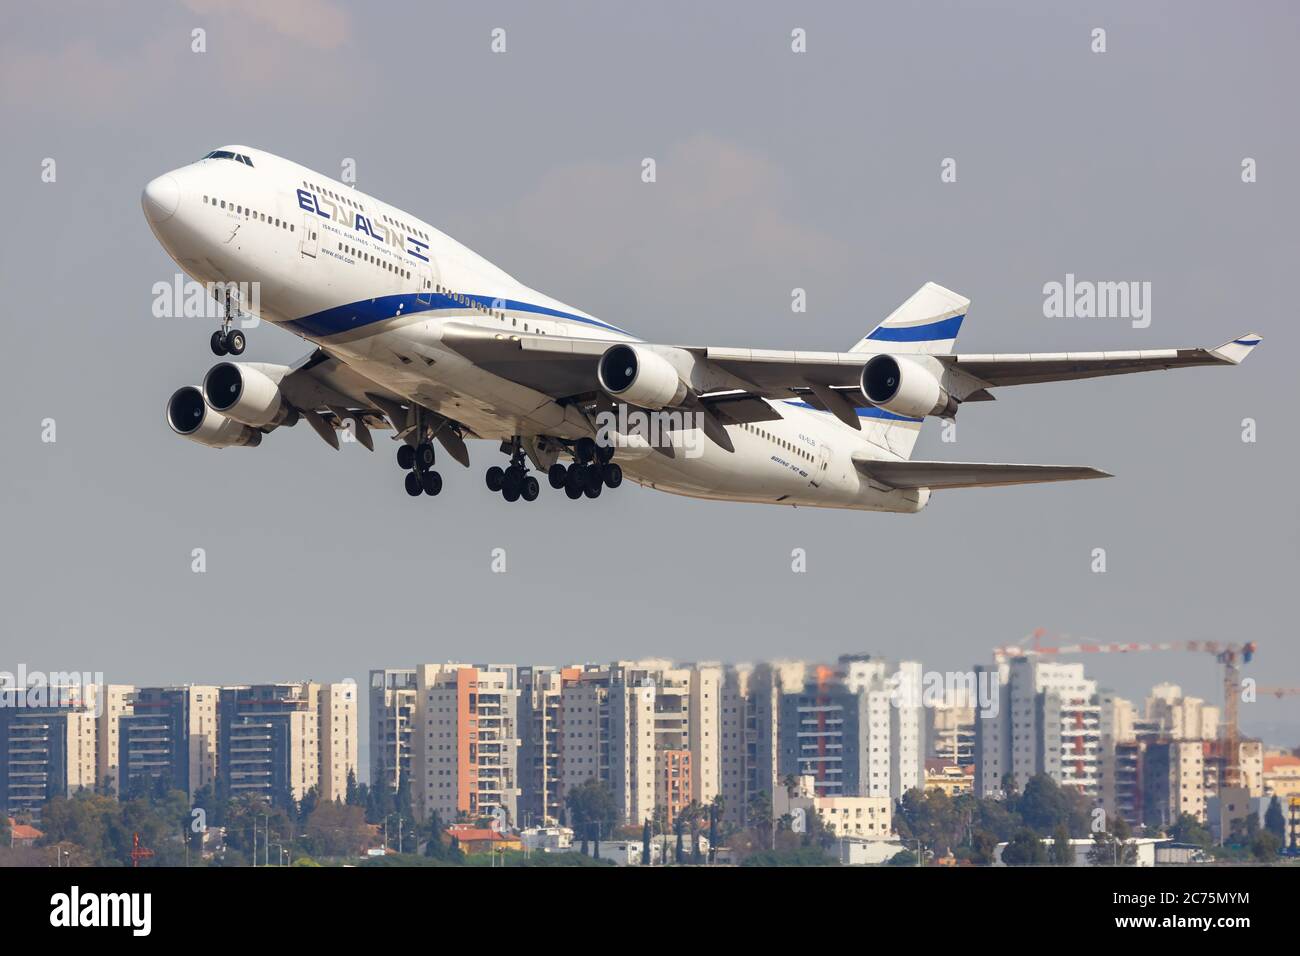 Tel Aviv, Israel - February 24, 2019: El Al Israel Airlines Boeing 747-400 airplane at Tel Aviv airport (TLV) in Israel. Boeing is an American aircraf Stock Photo